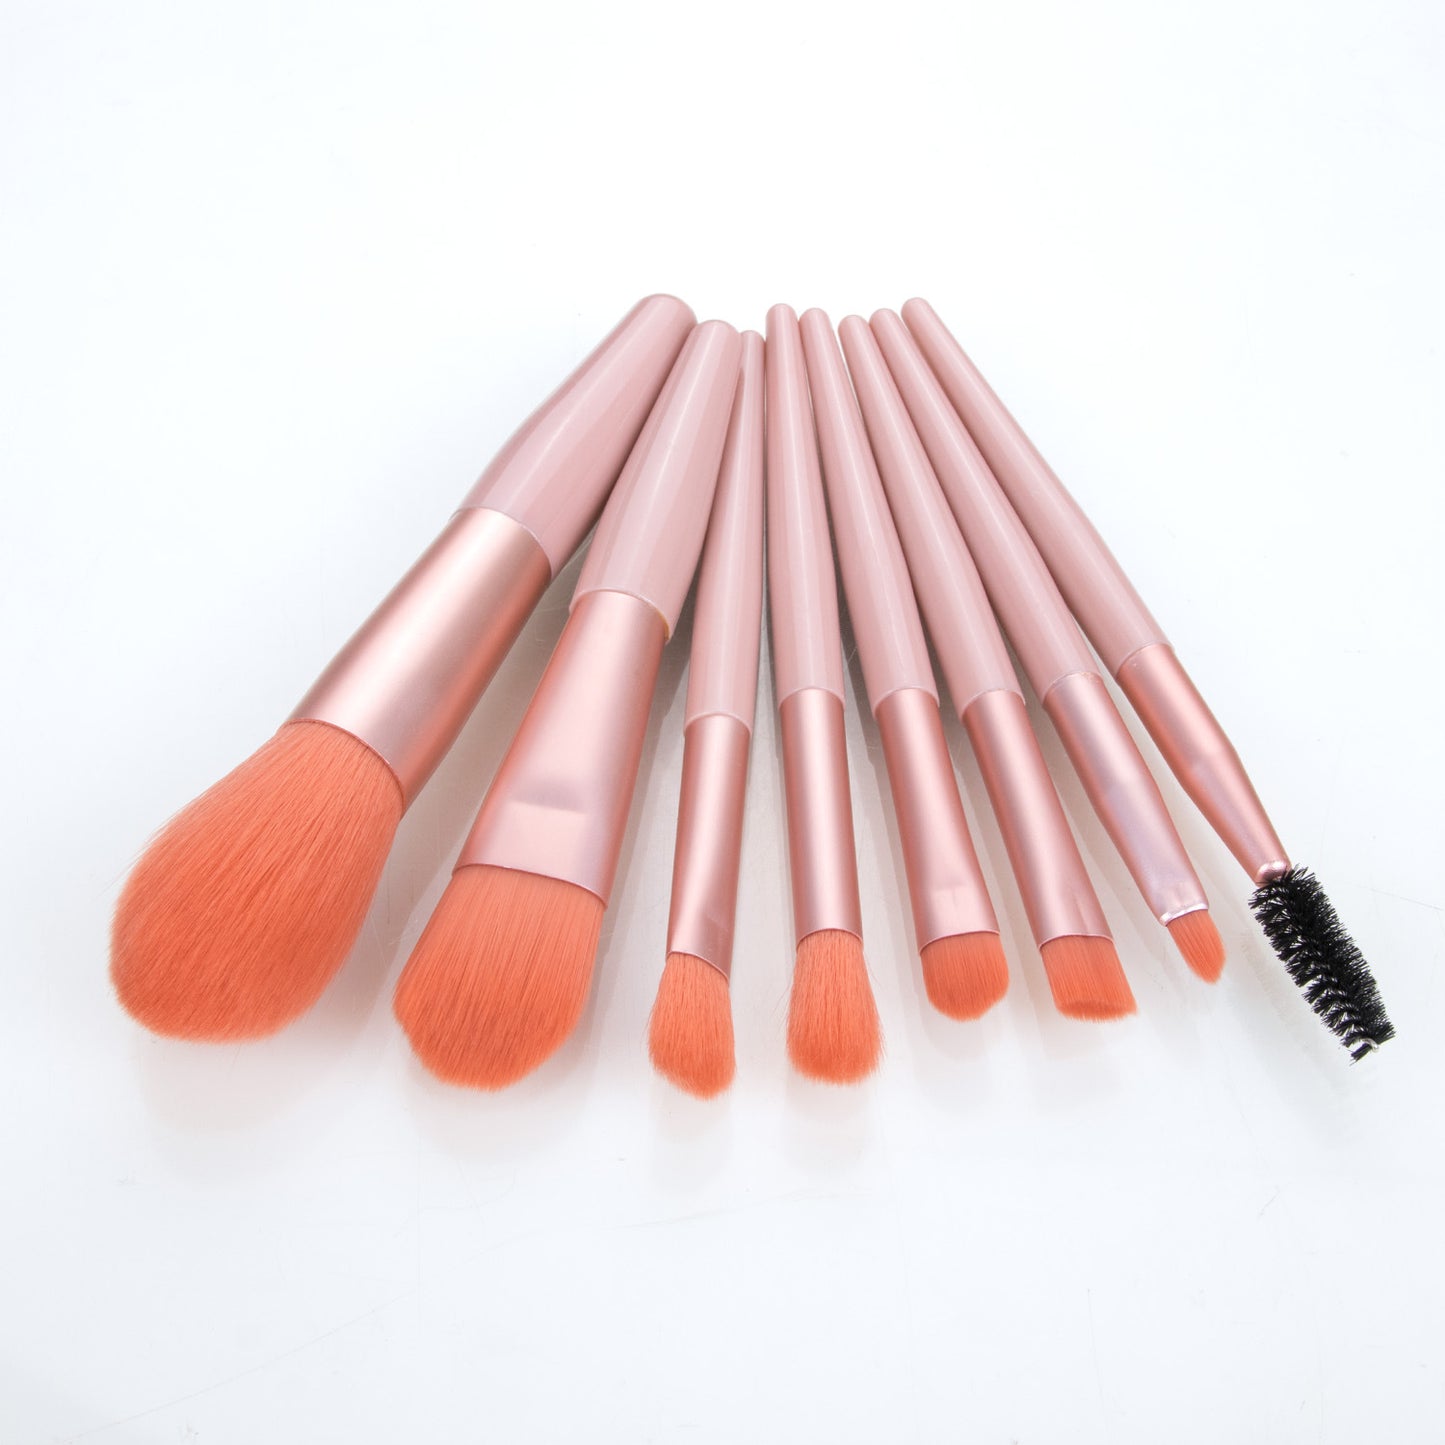 Nongying 8 mini Morandi color makeup brush sets, soft bristles, plastic handle, portable beauty tools in stock